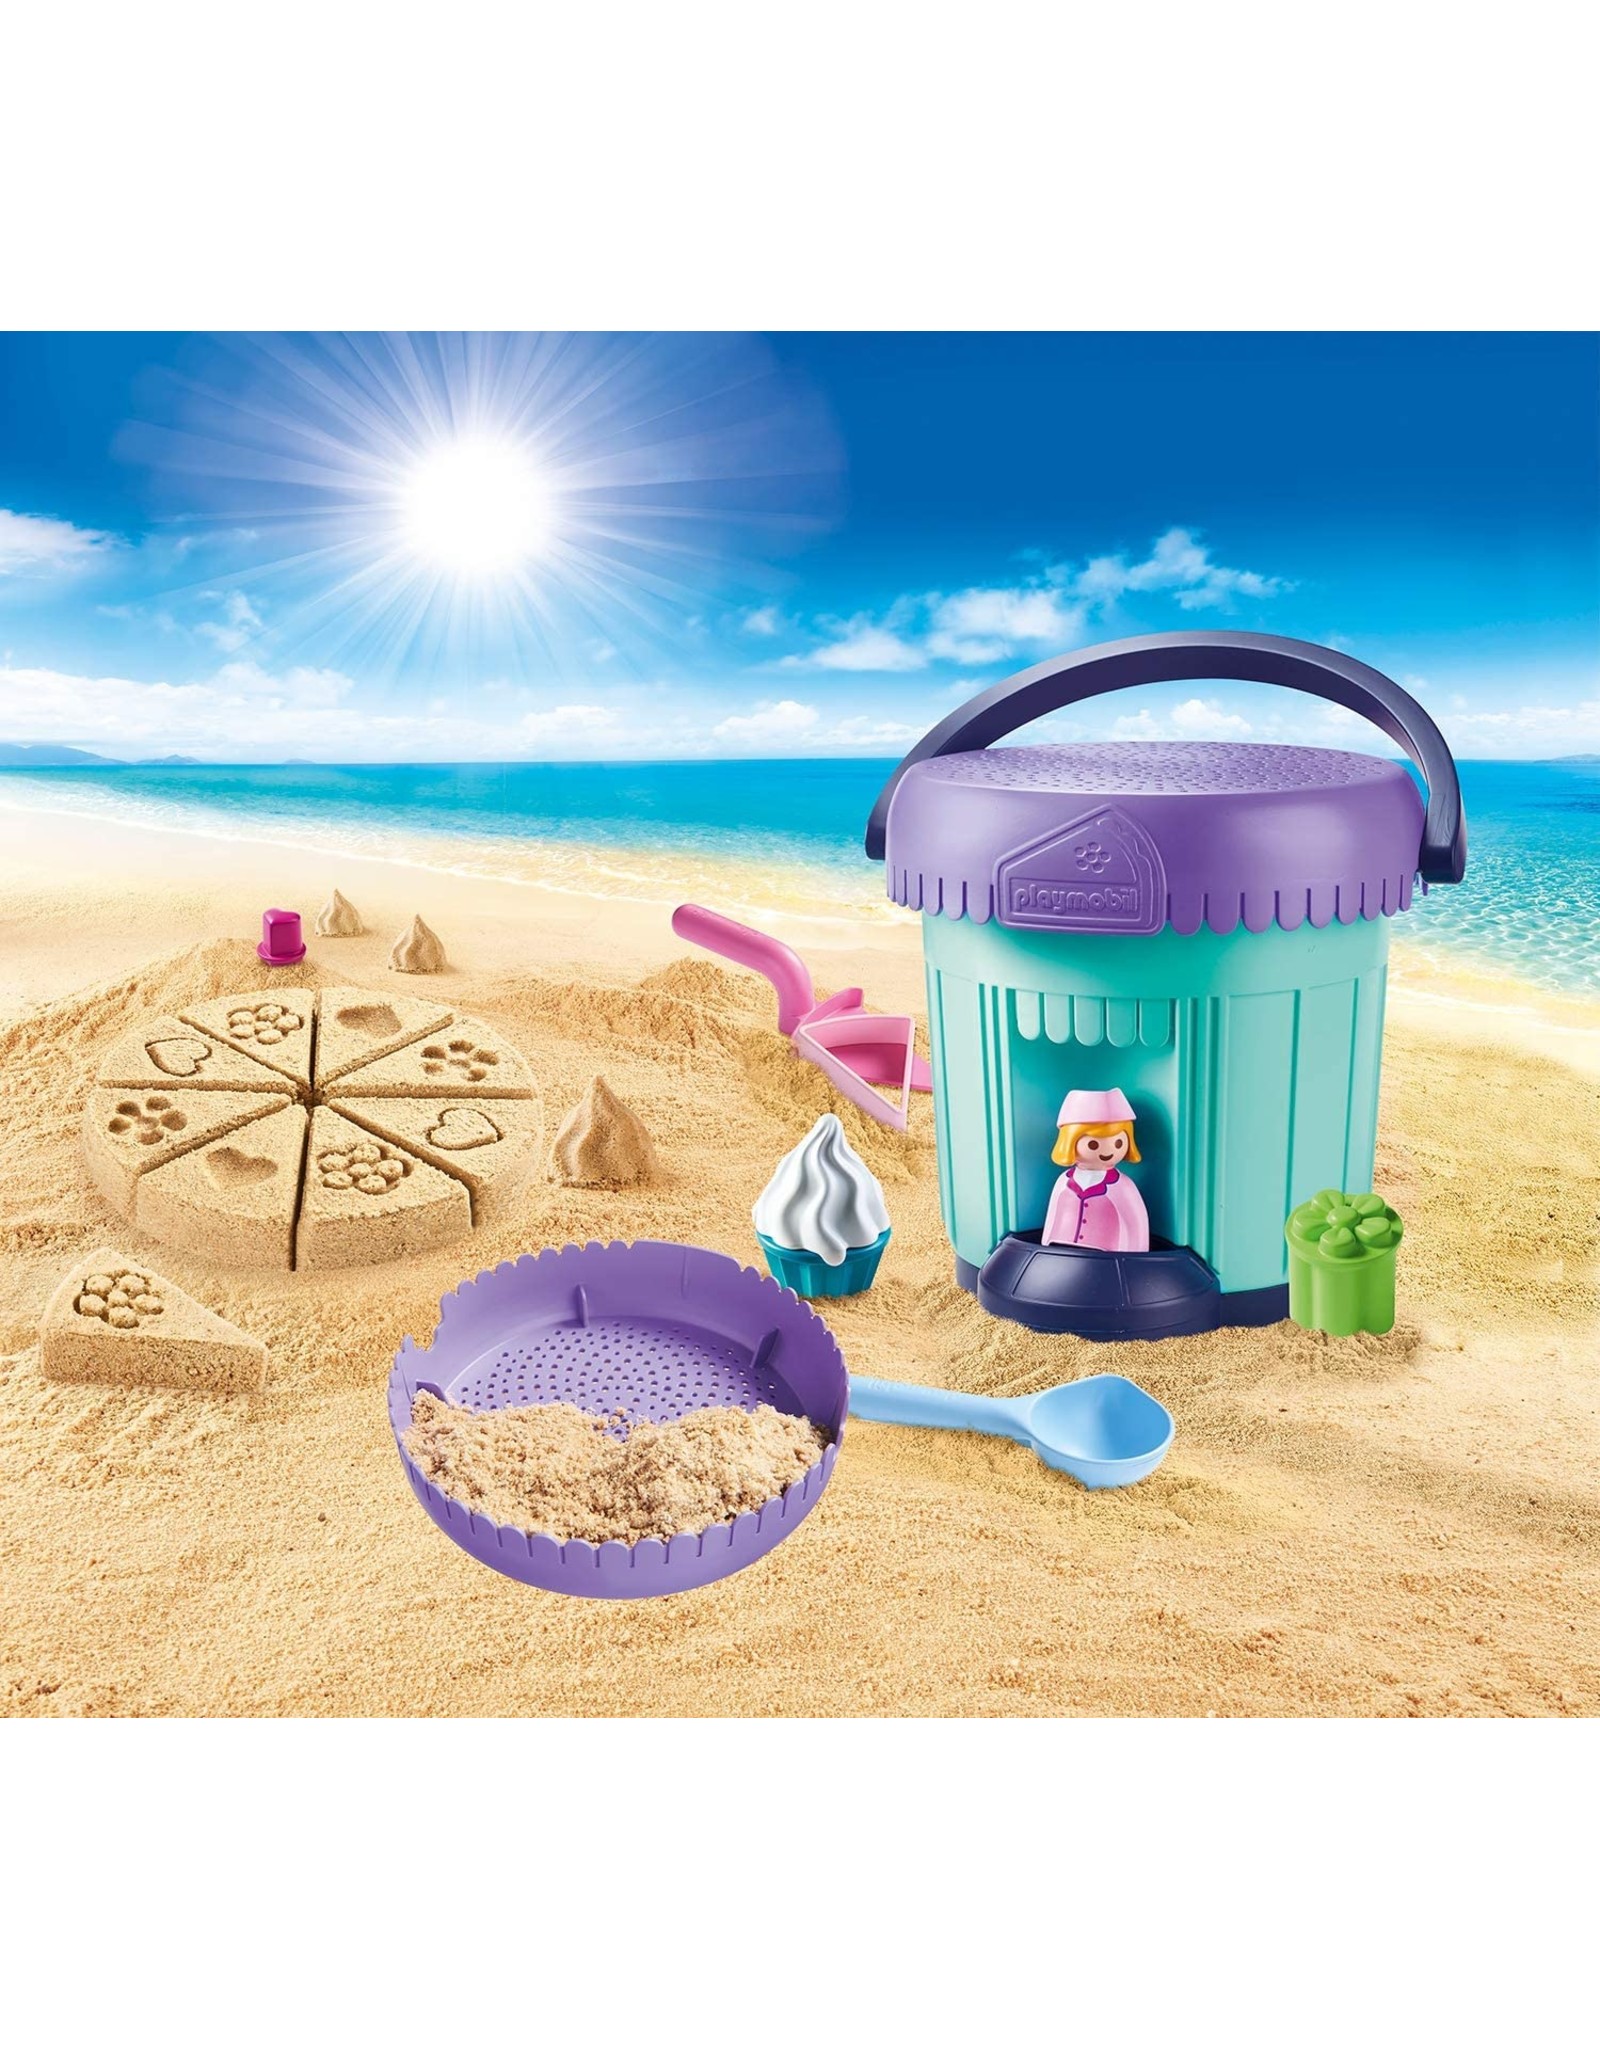 Bakery Sand Bucket 70339